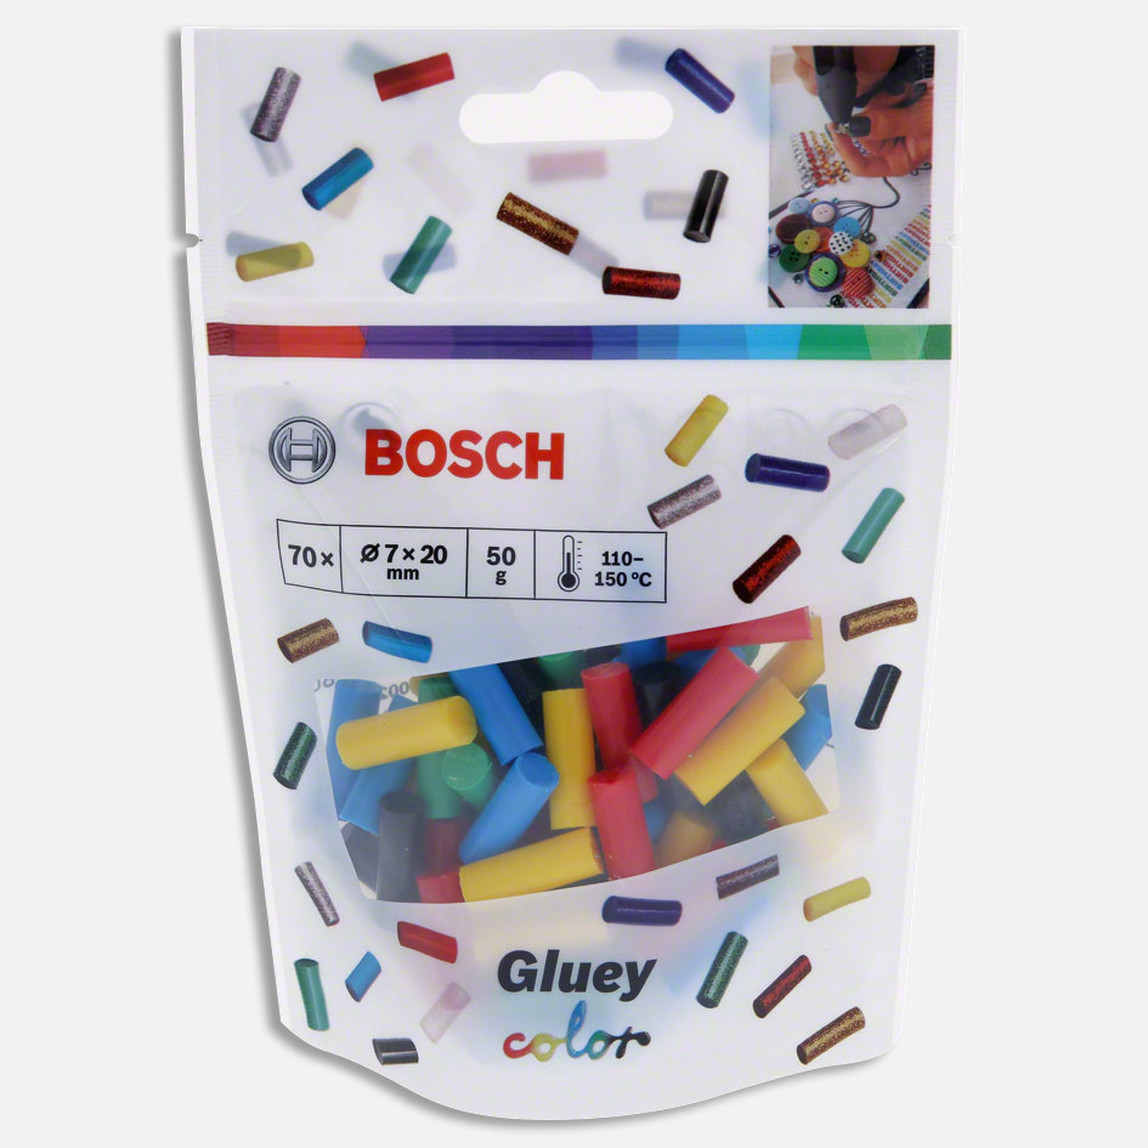    Bosch Gluey Tutkal Çubuğu 7mm - Şeffaf 